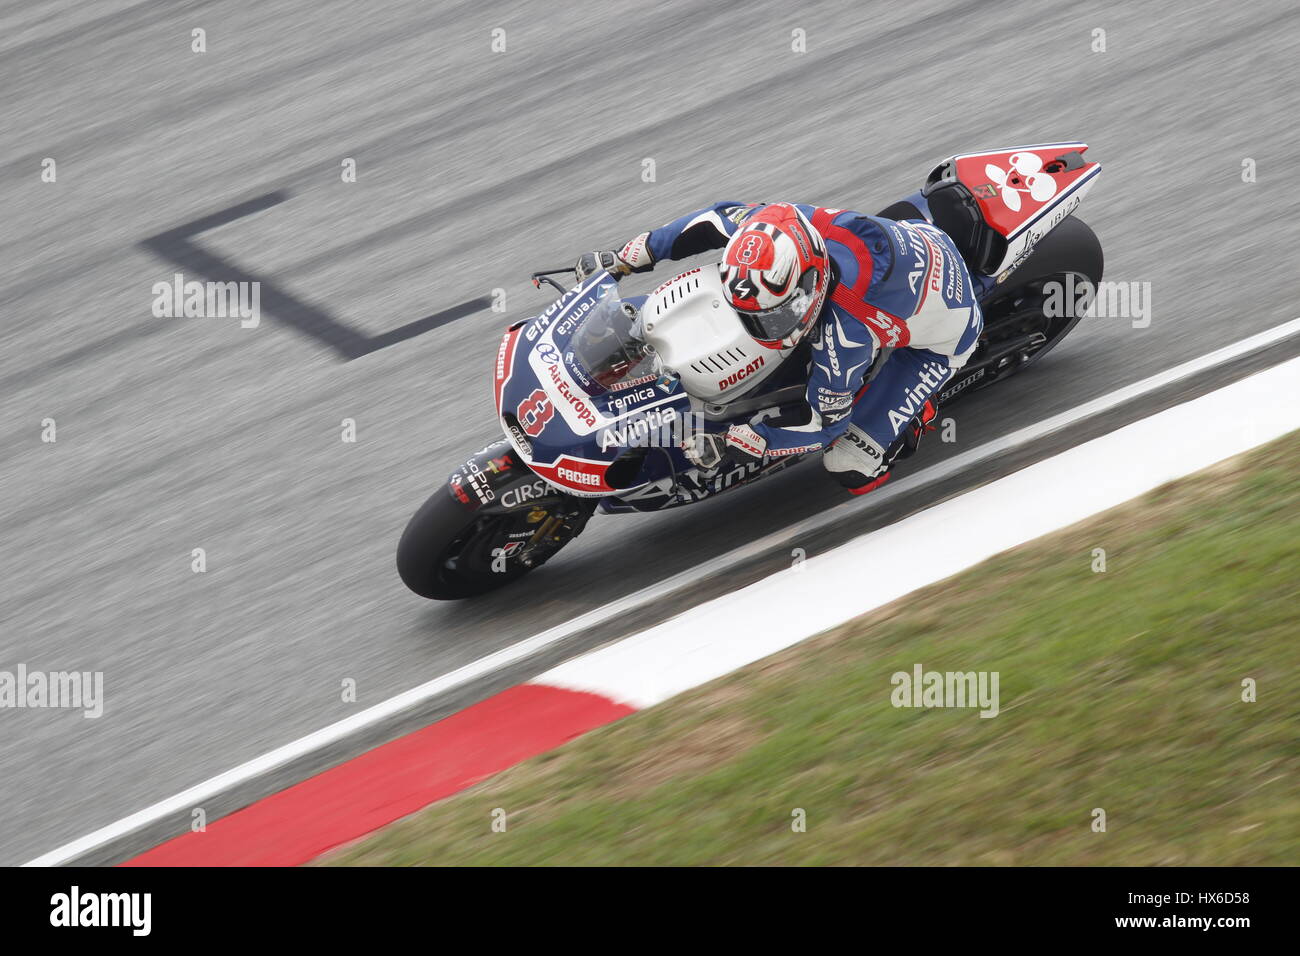 Motor Sports bike racing driver Foto Stock